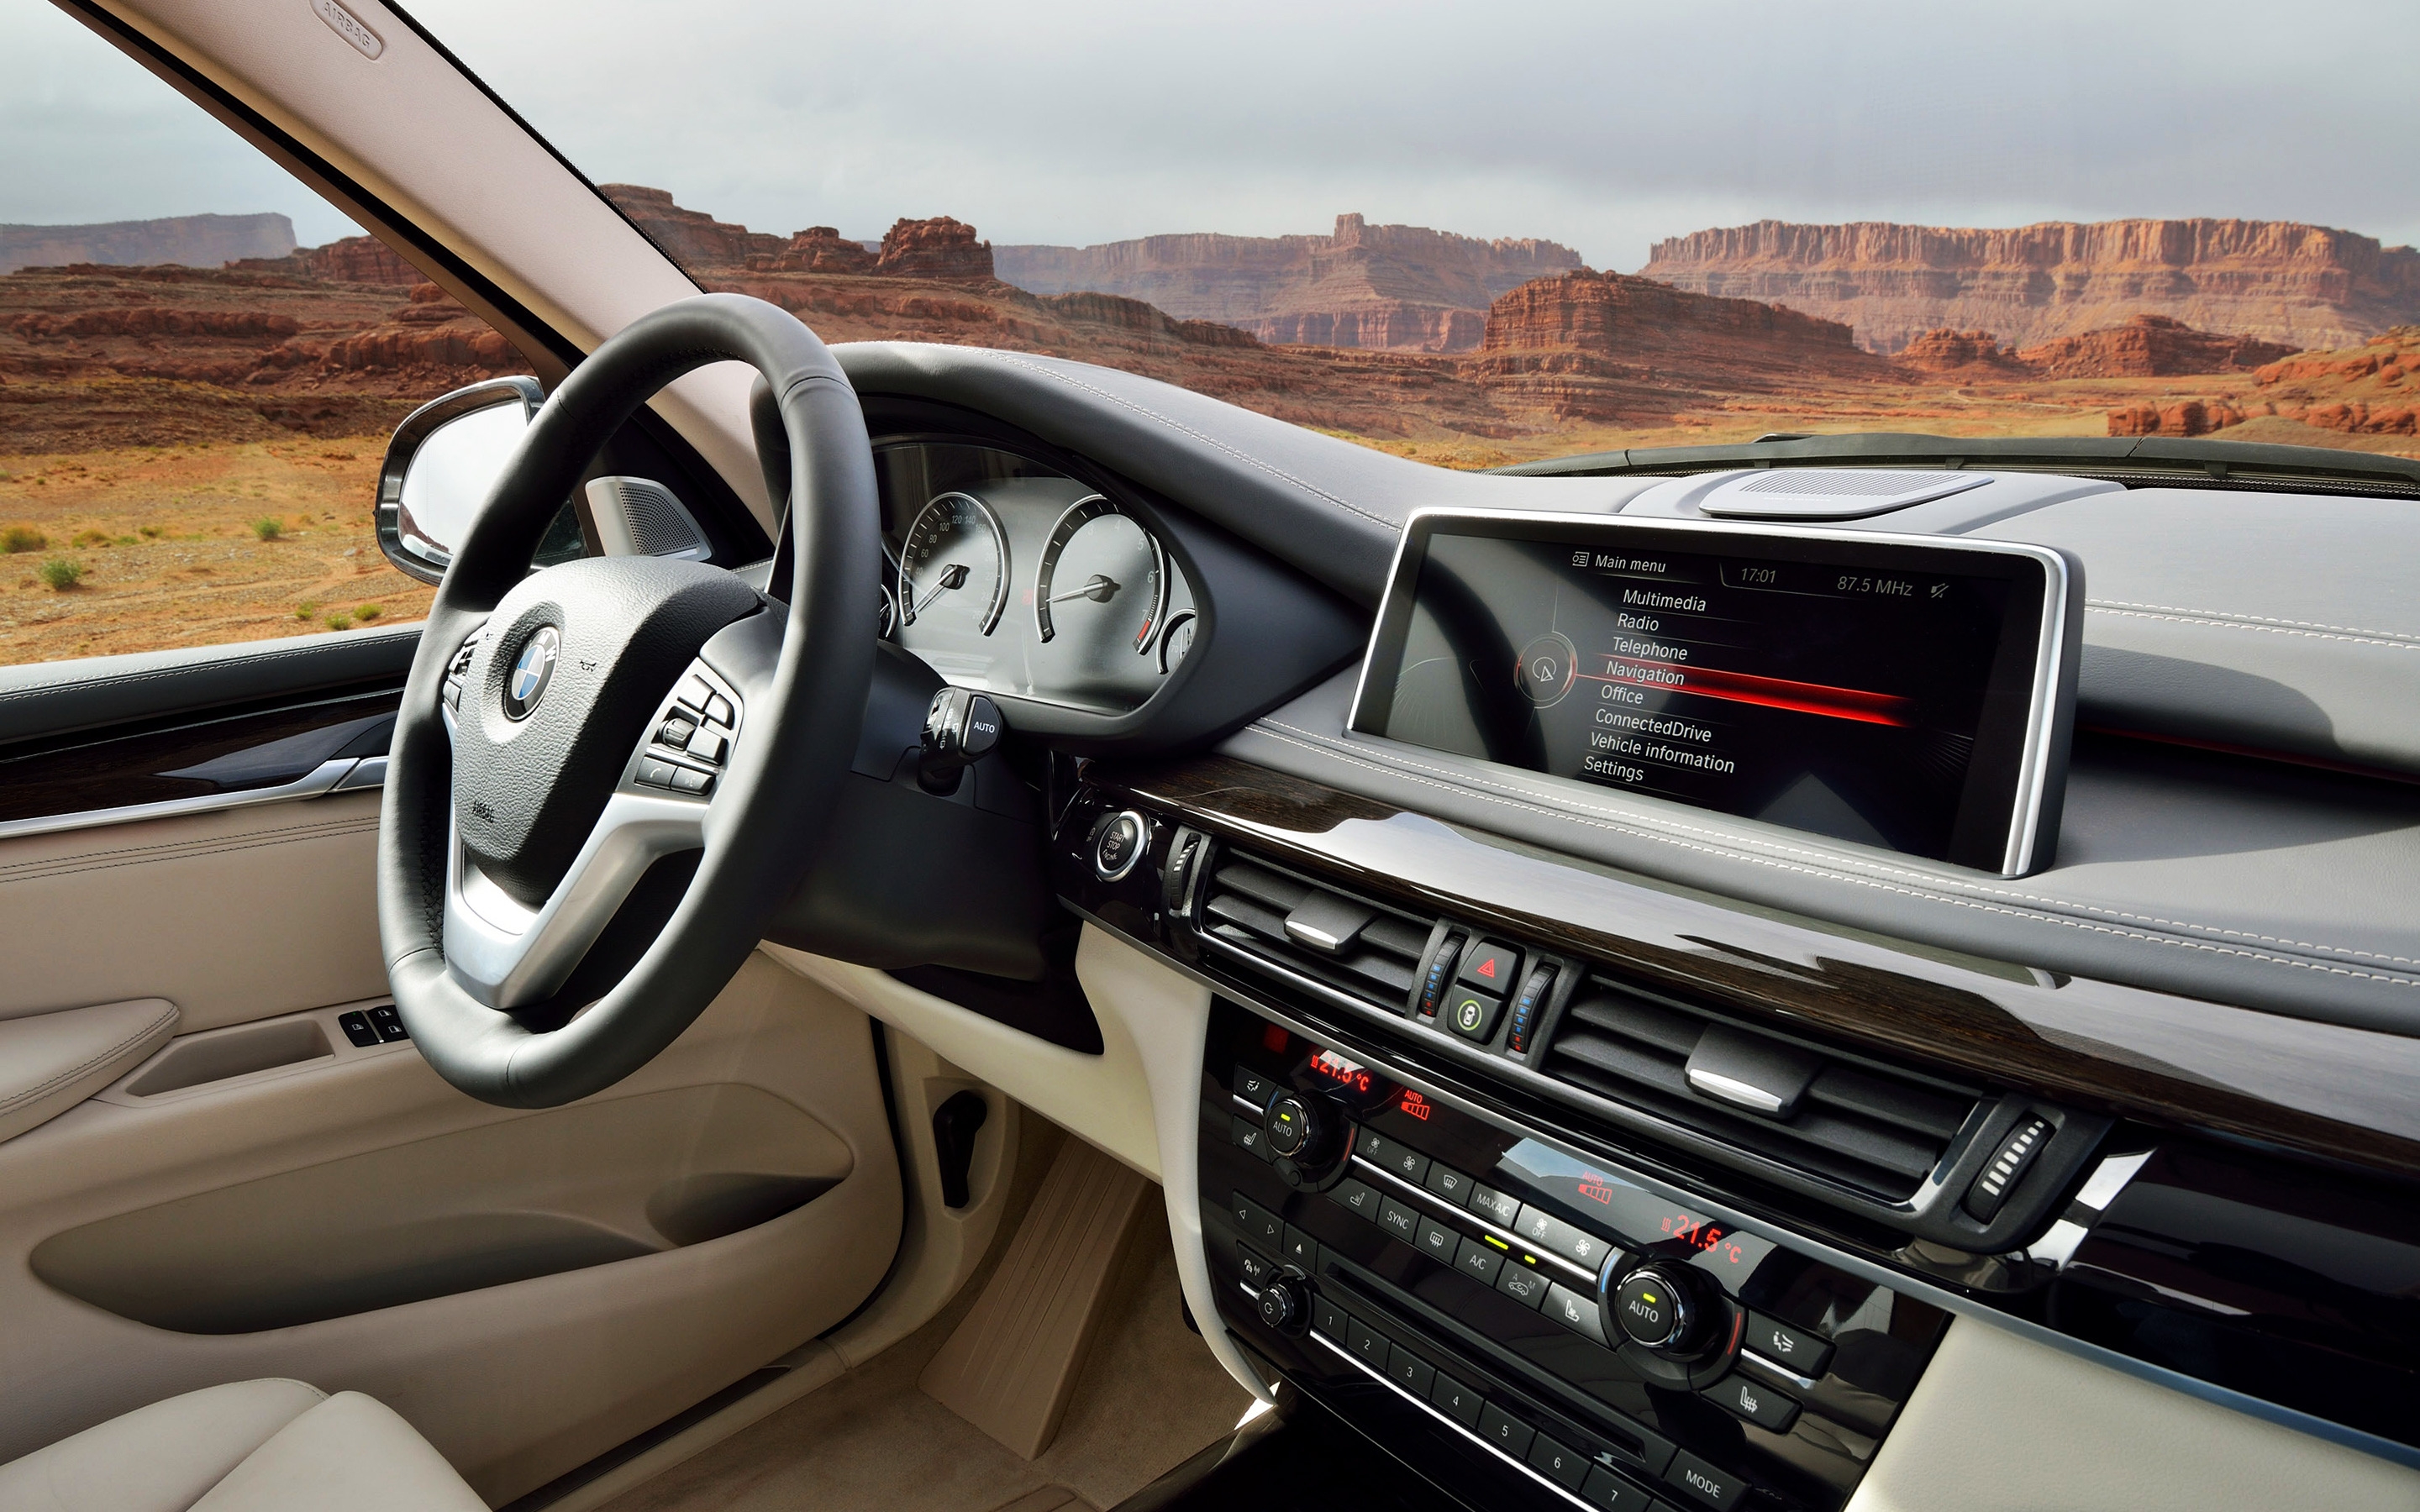 BMW X5 2014 Dashboard for 2880 x 1800 Retina Display resolution